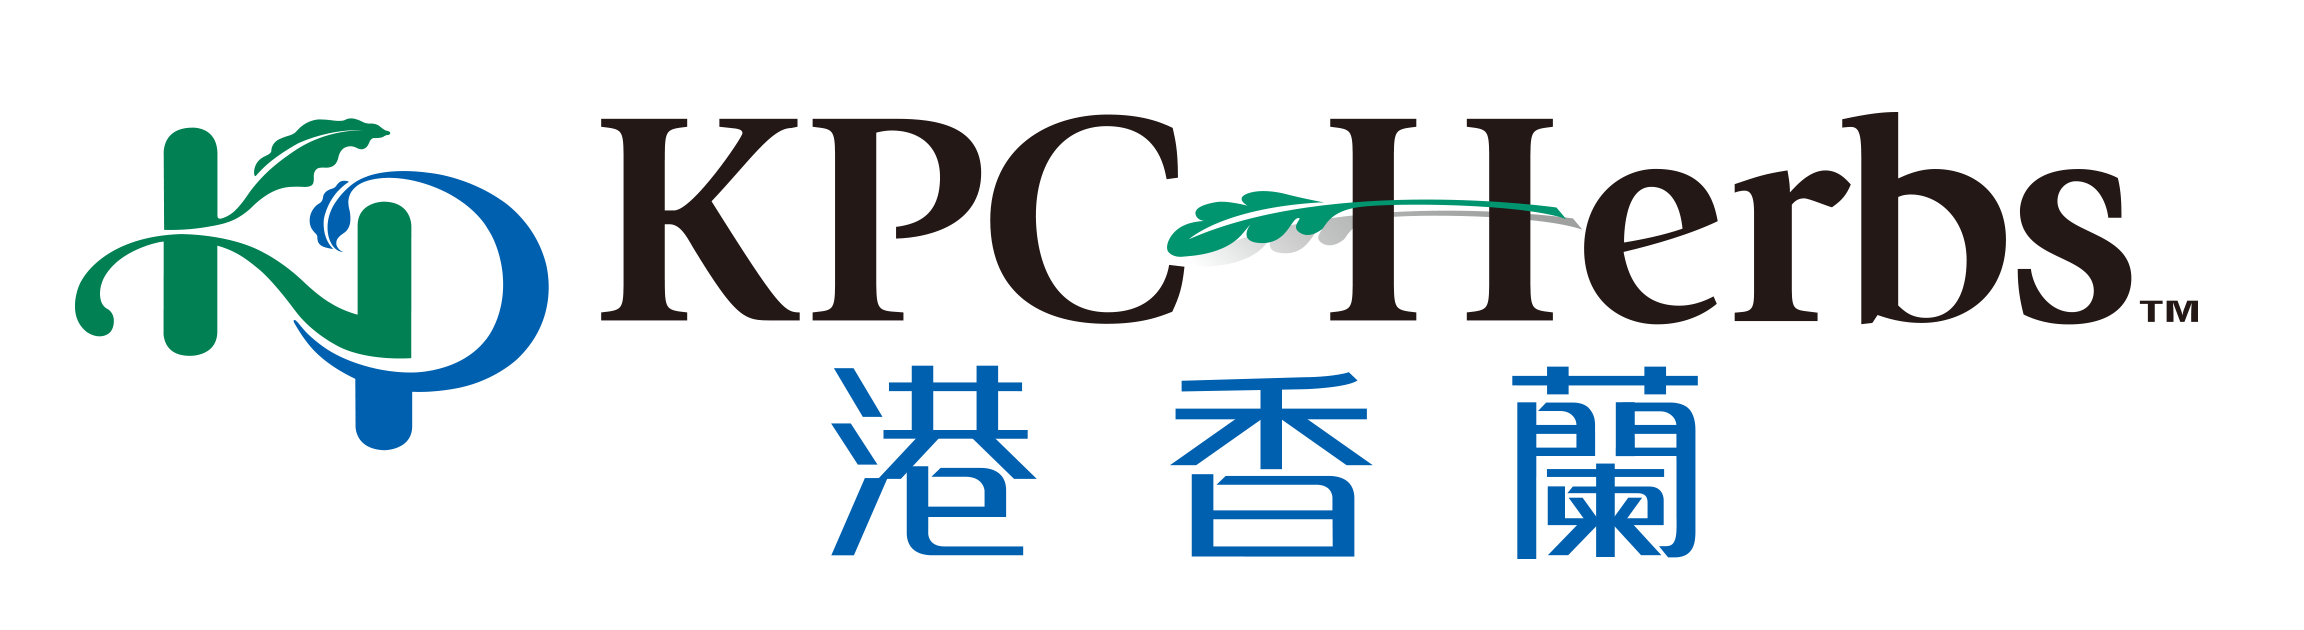 KPC logo 